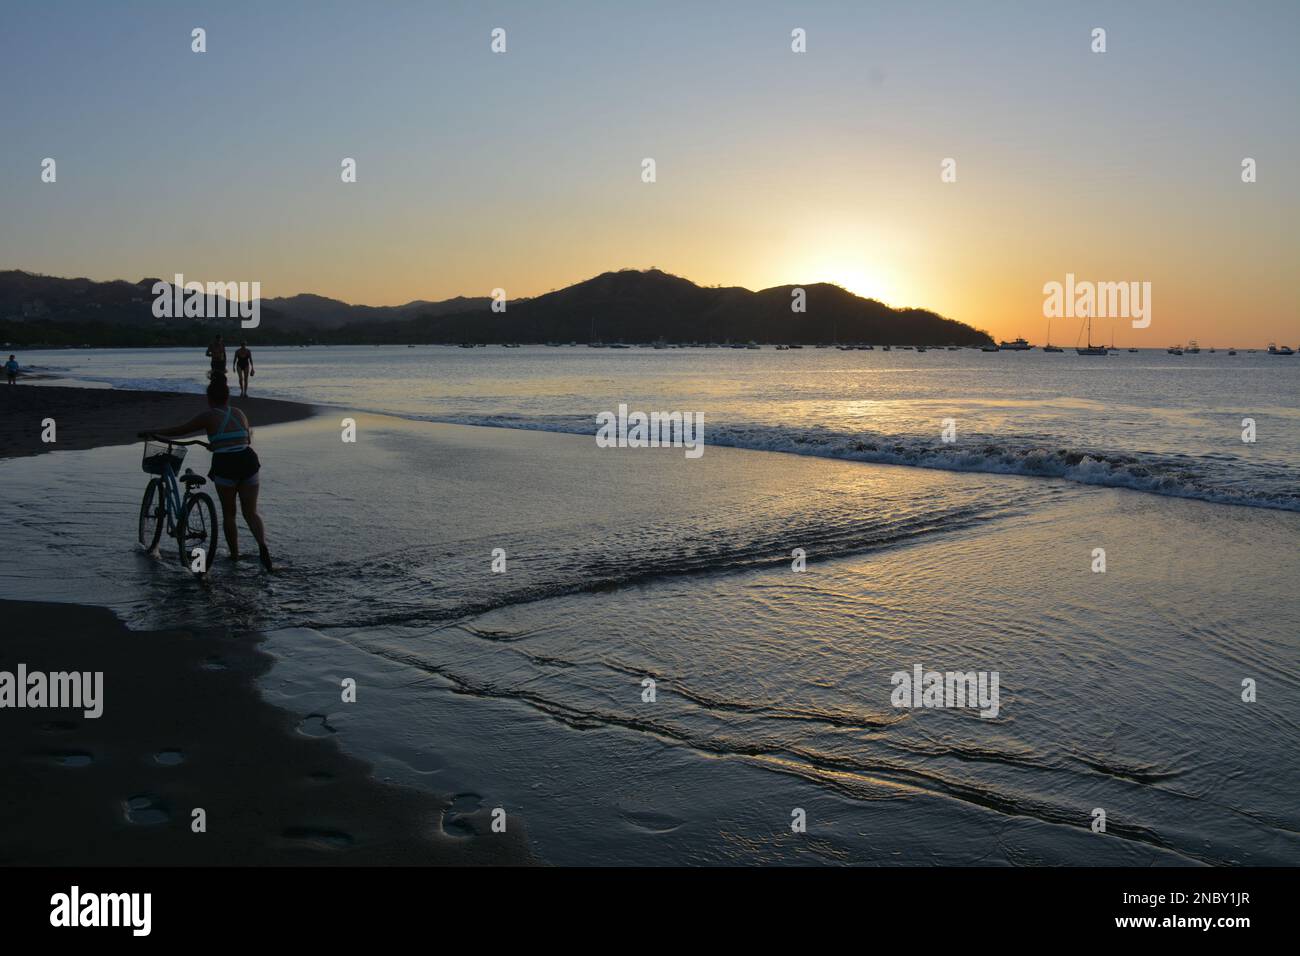 People on beach at sundown on Playa Coco in Costa Rica Stock Photo